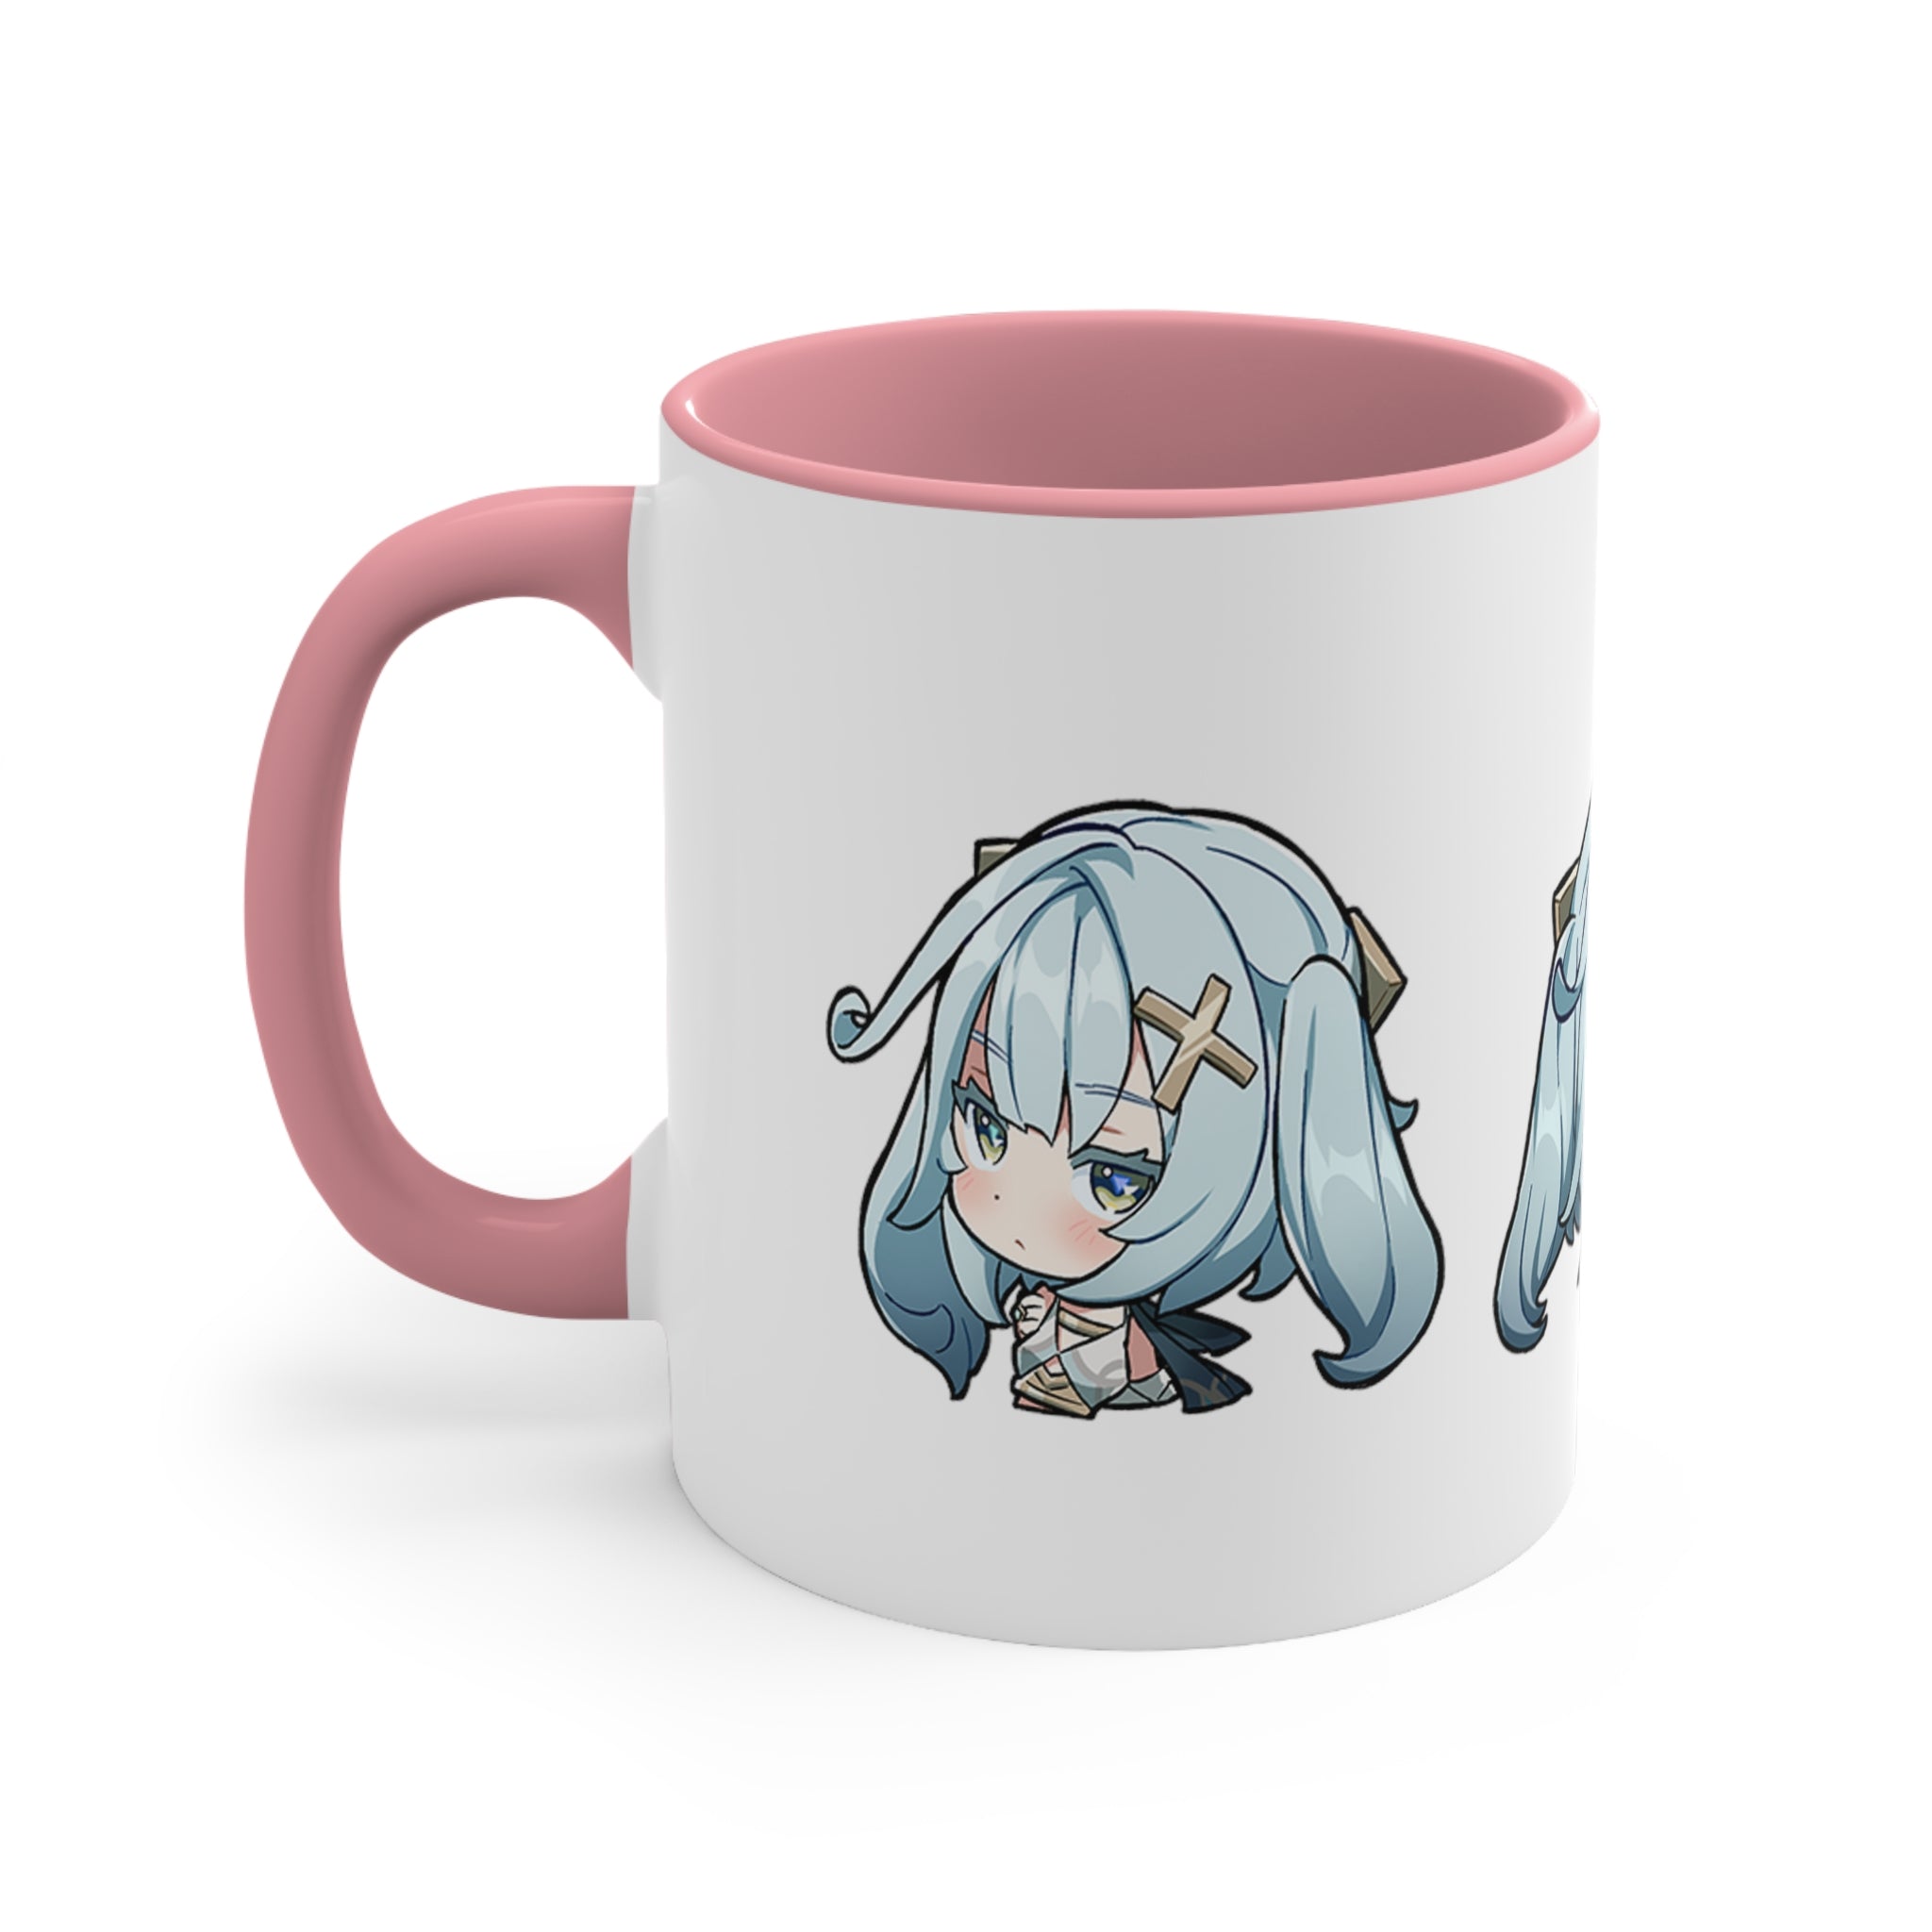 Faruzan Genshin Impact Accent Coffee Mug, 11oz Cups Mugs Cup Gift For Gamer Gifts Game Anime Fanart Fan Birthday Valentine's Christmas